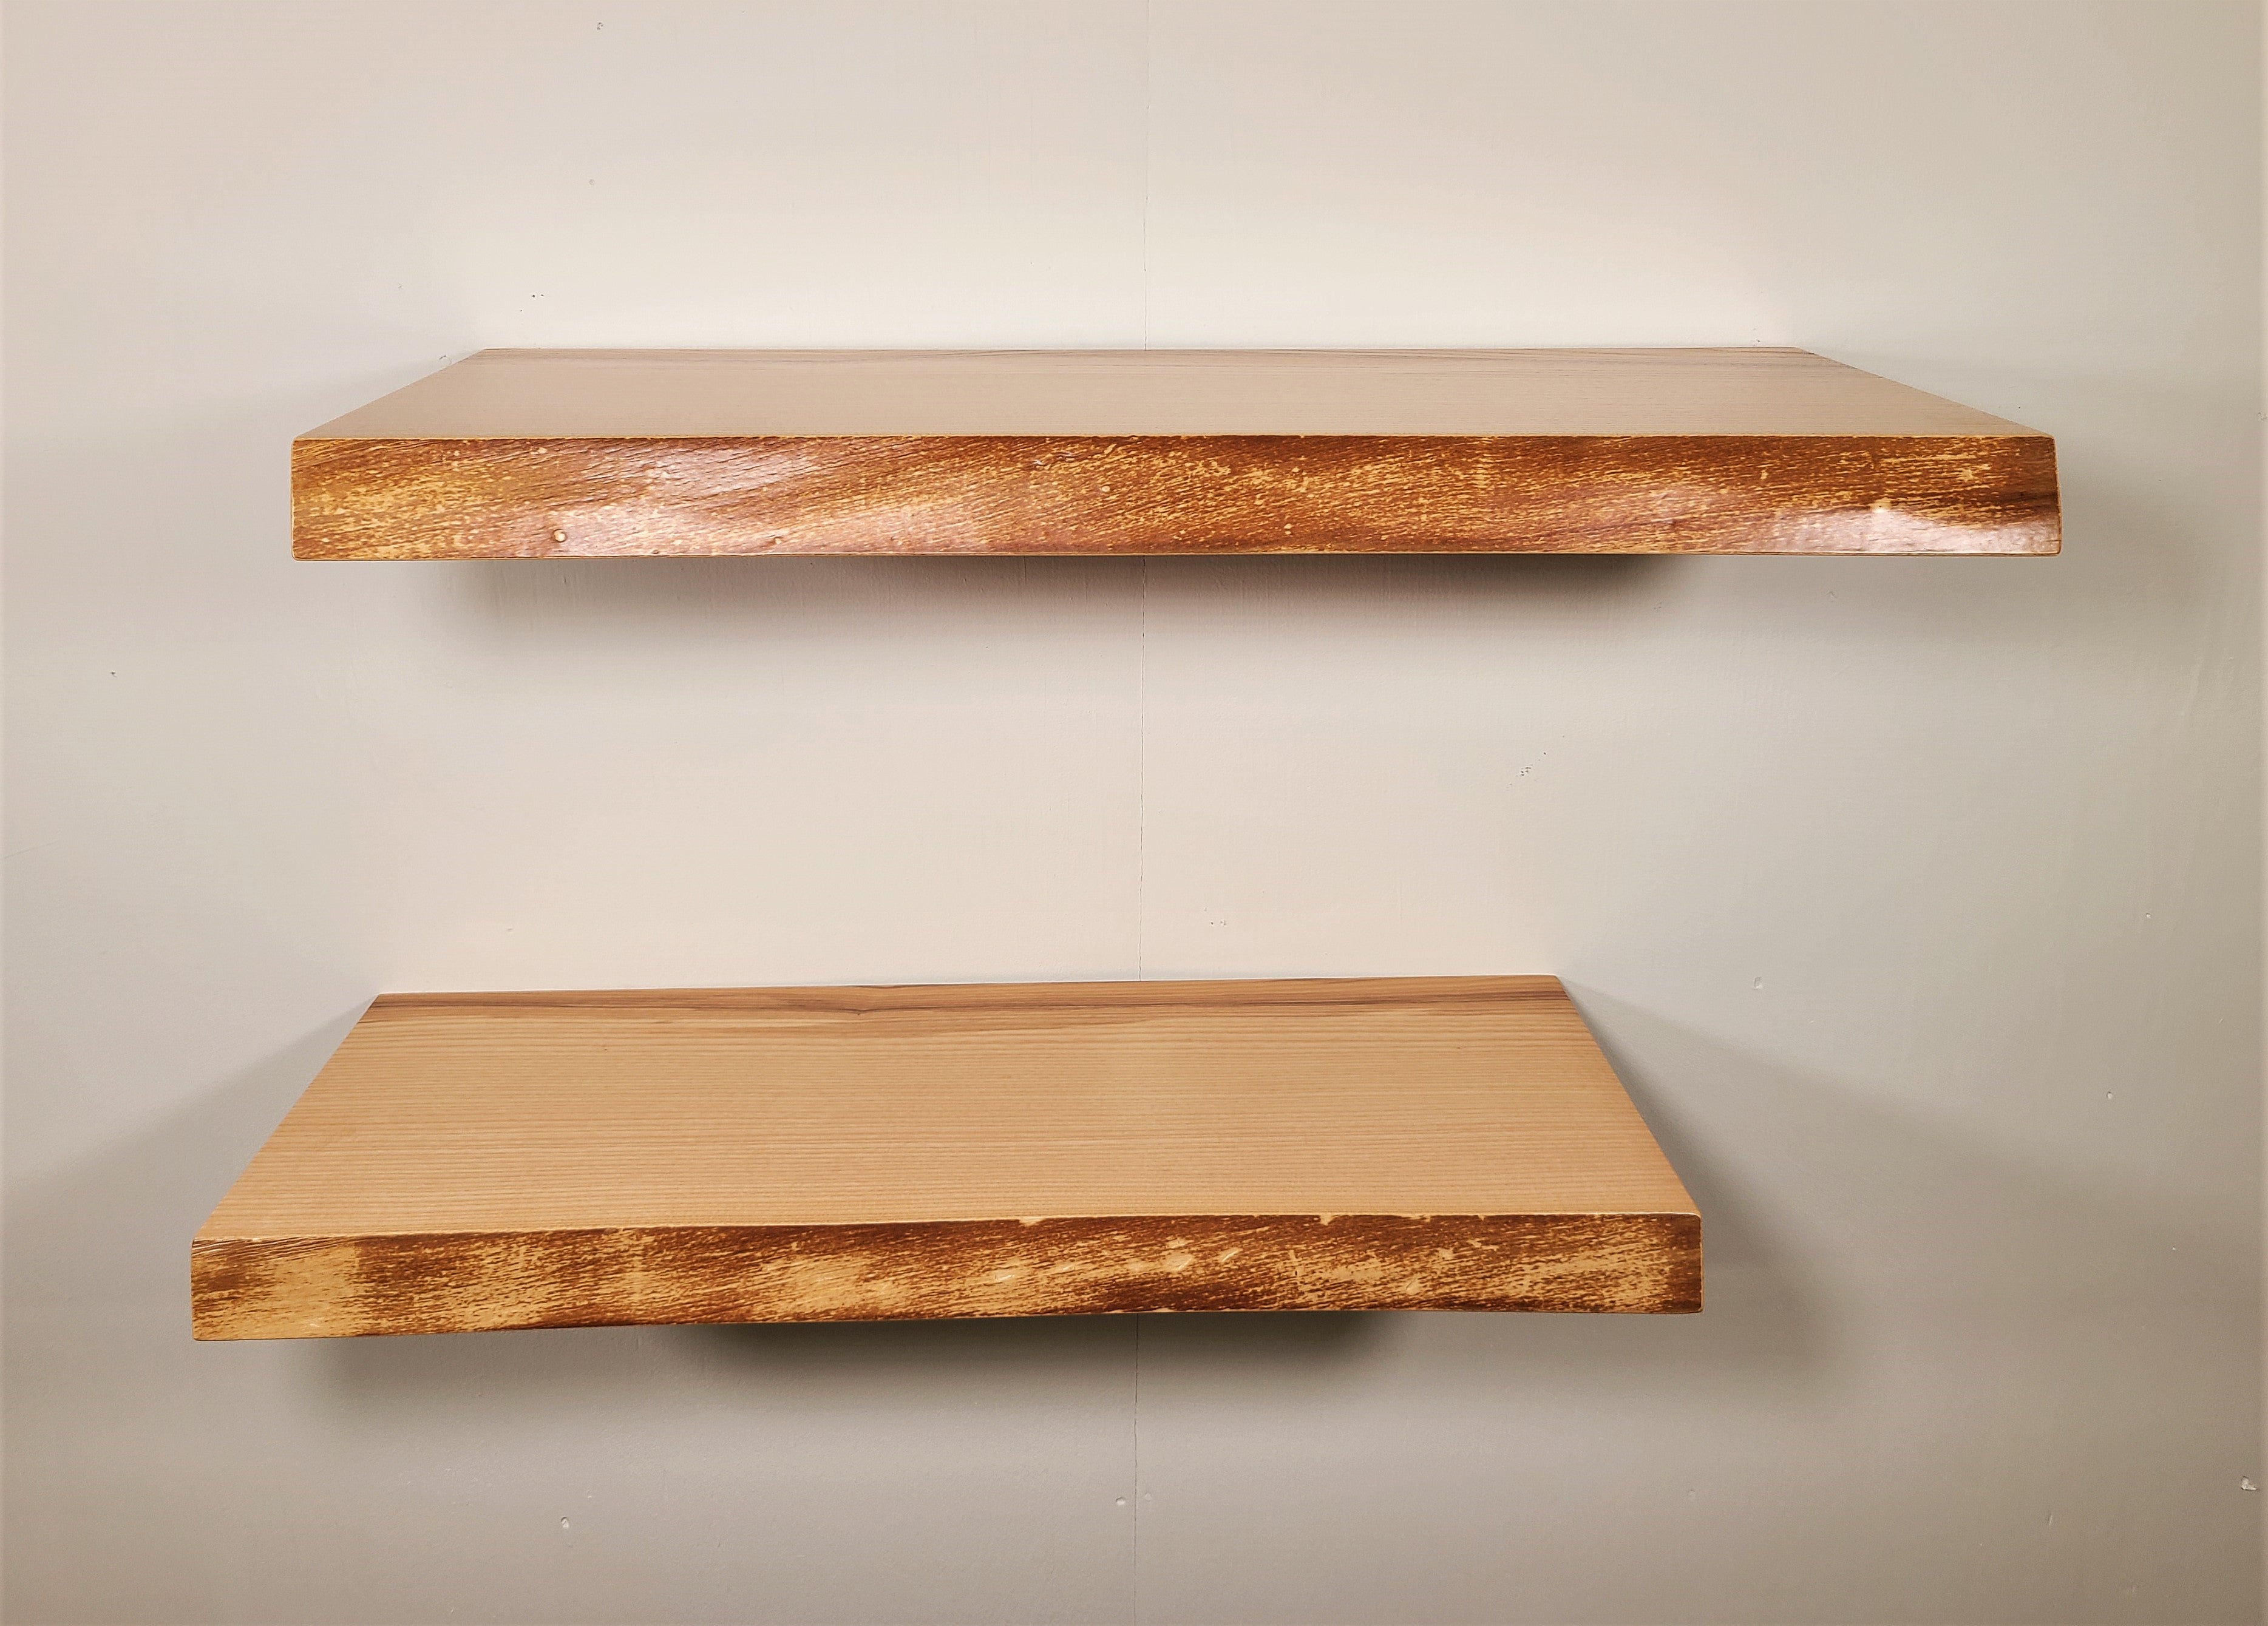 Ash wood floating shelves for the kitchen